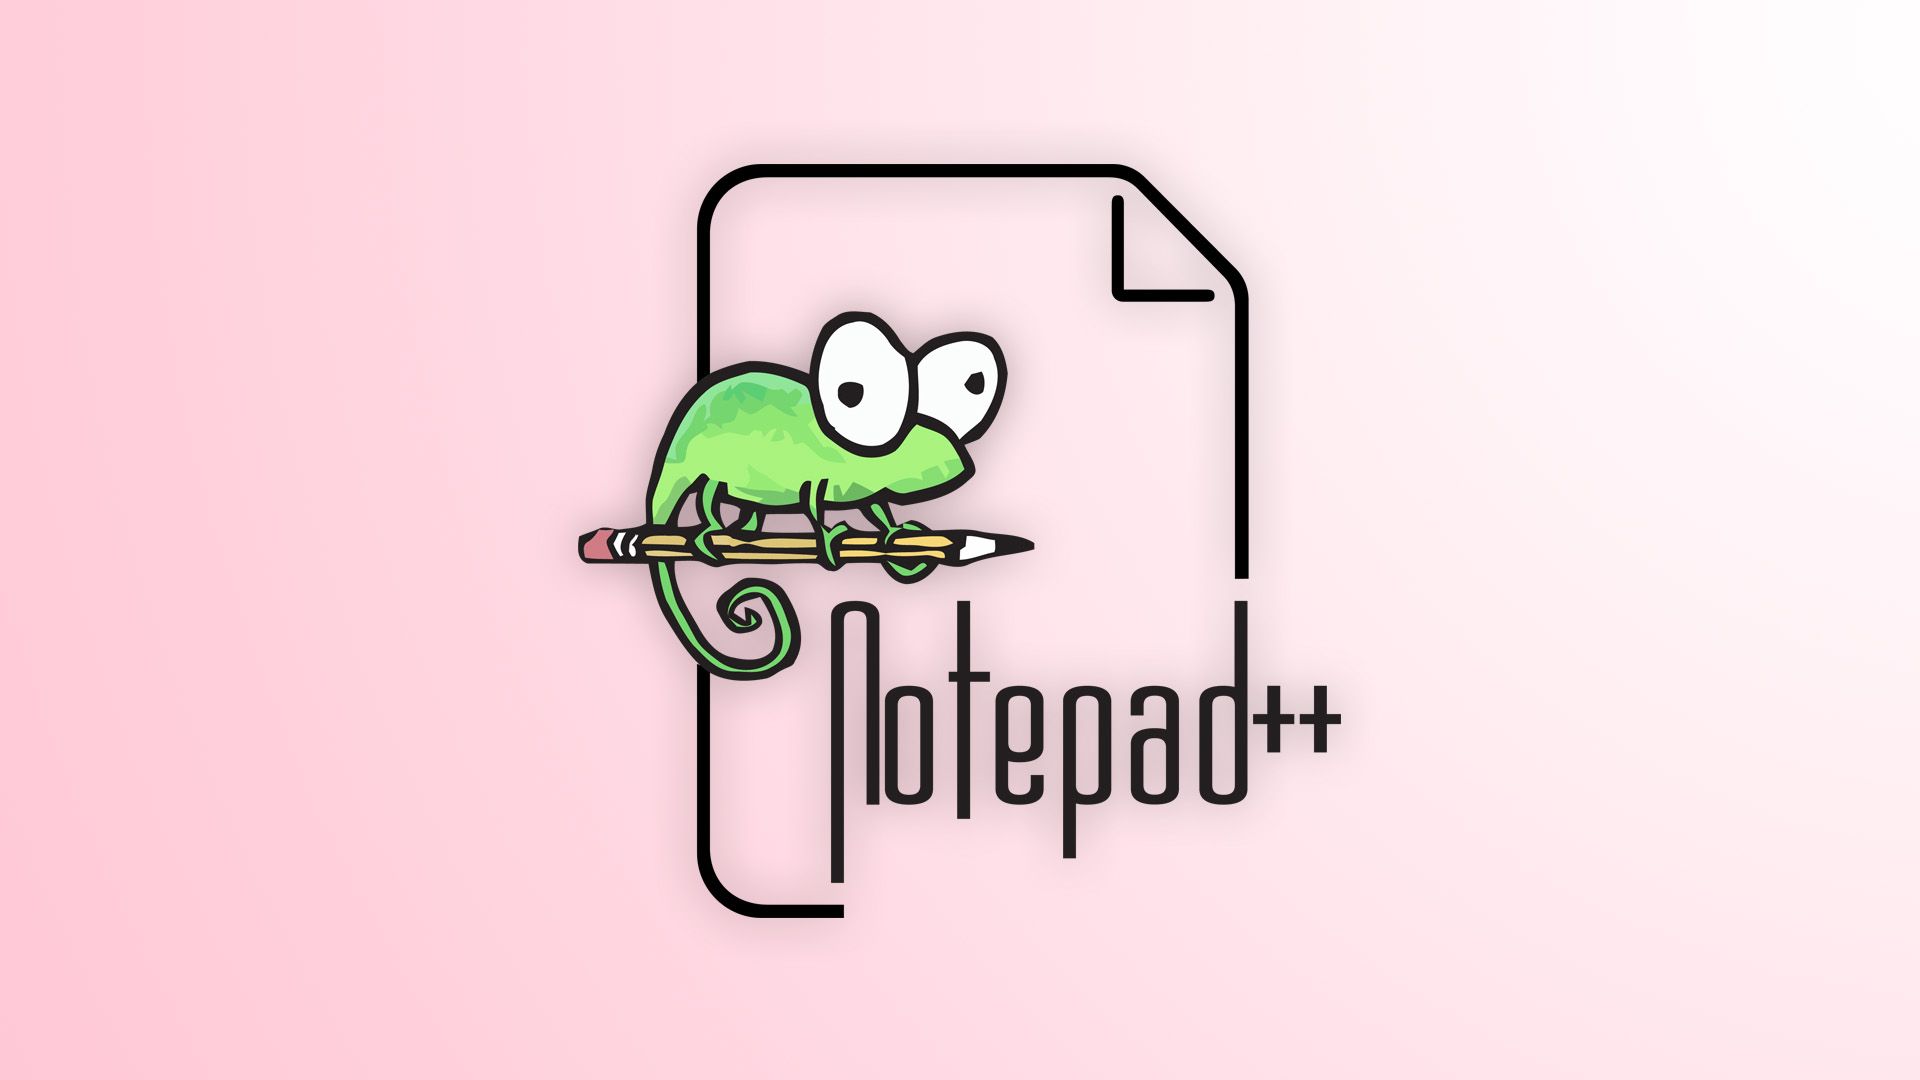 Notepad++ logo.